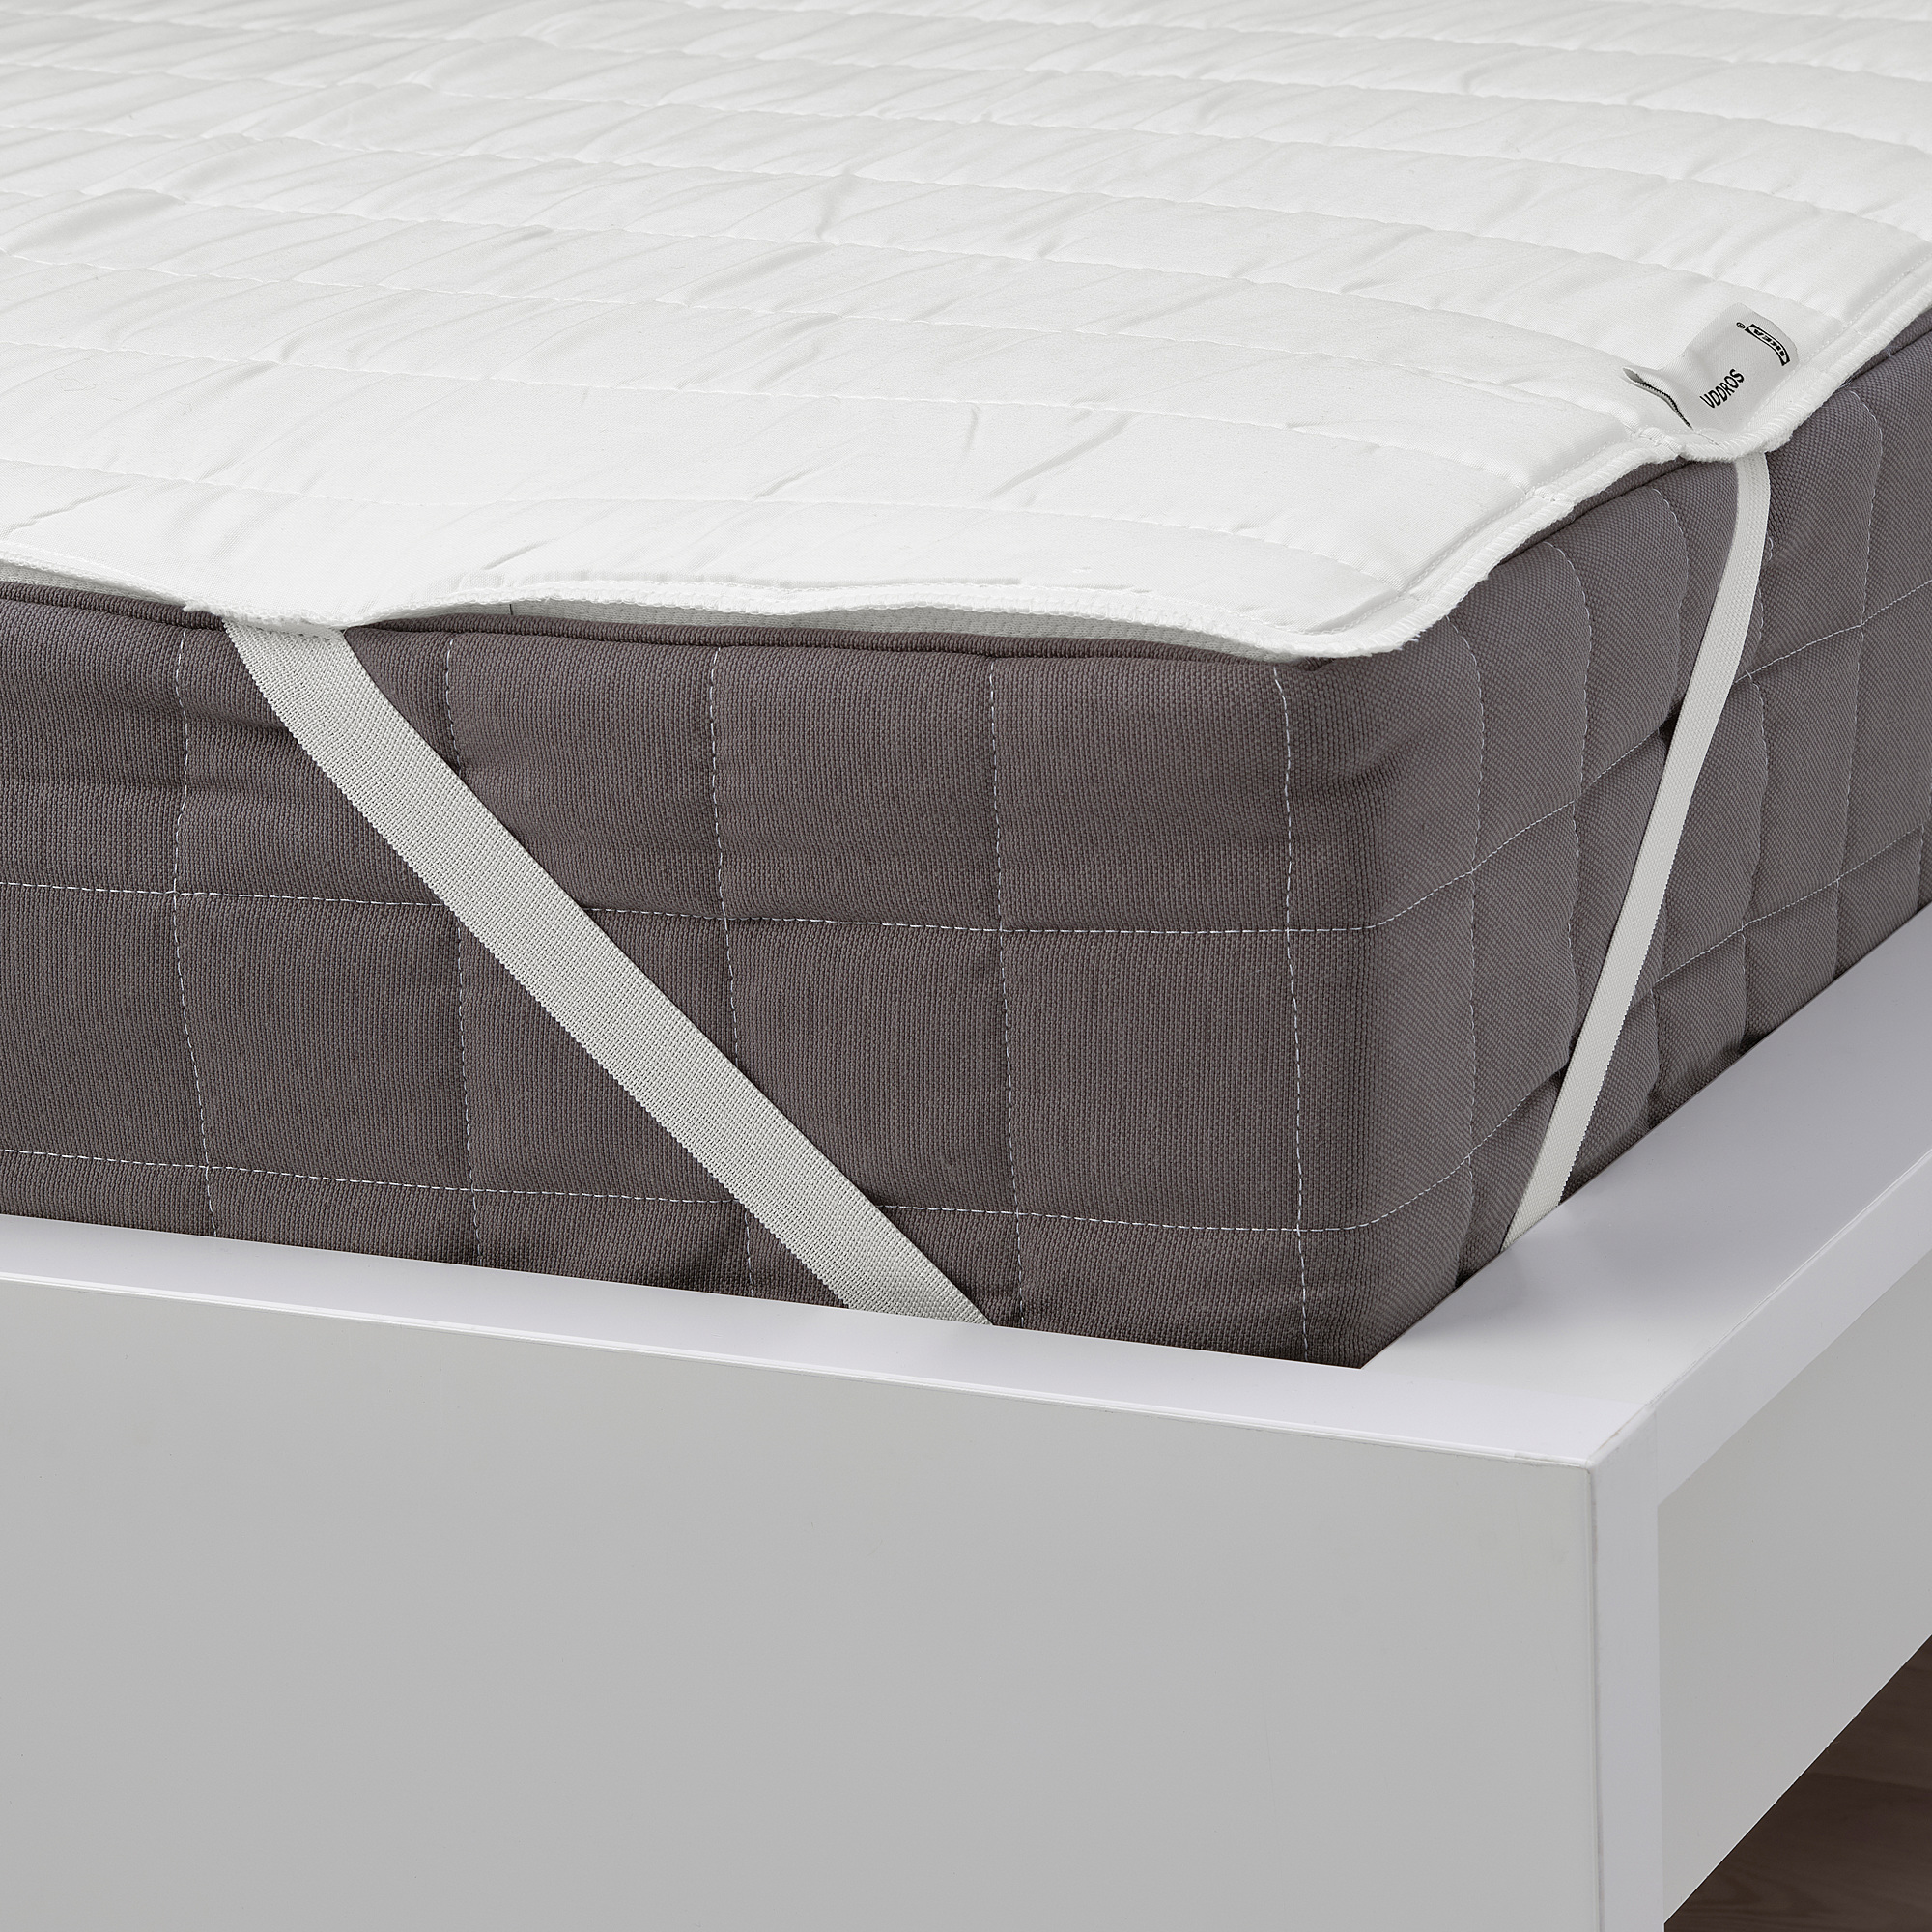 LUDDROS mattress protector